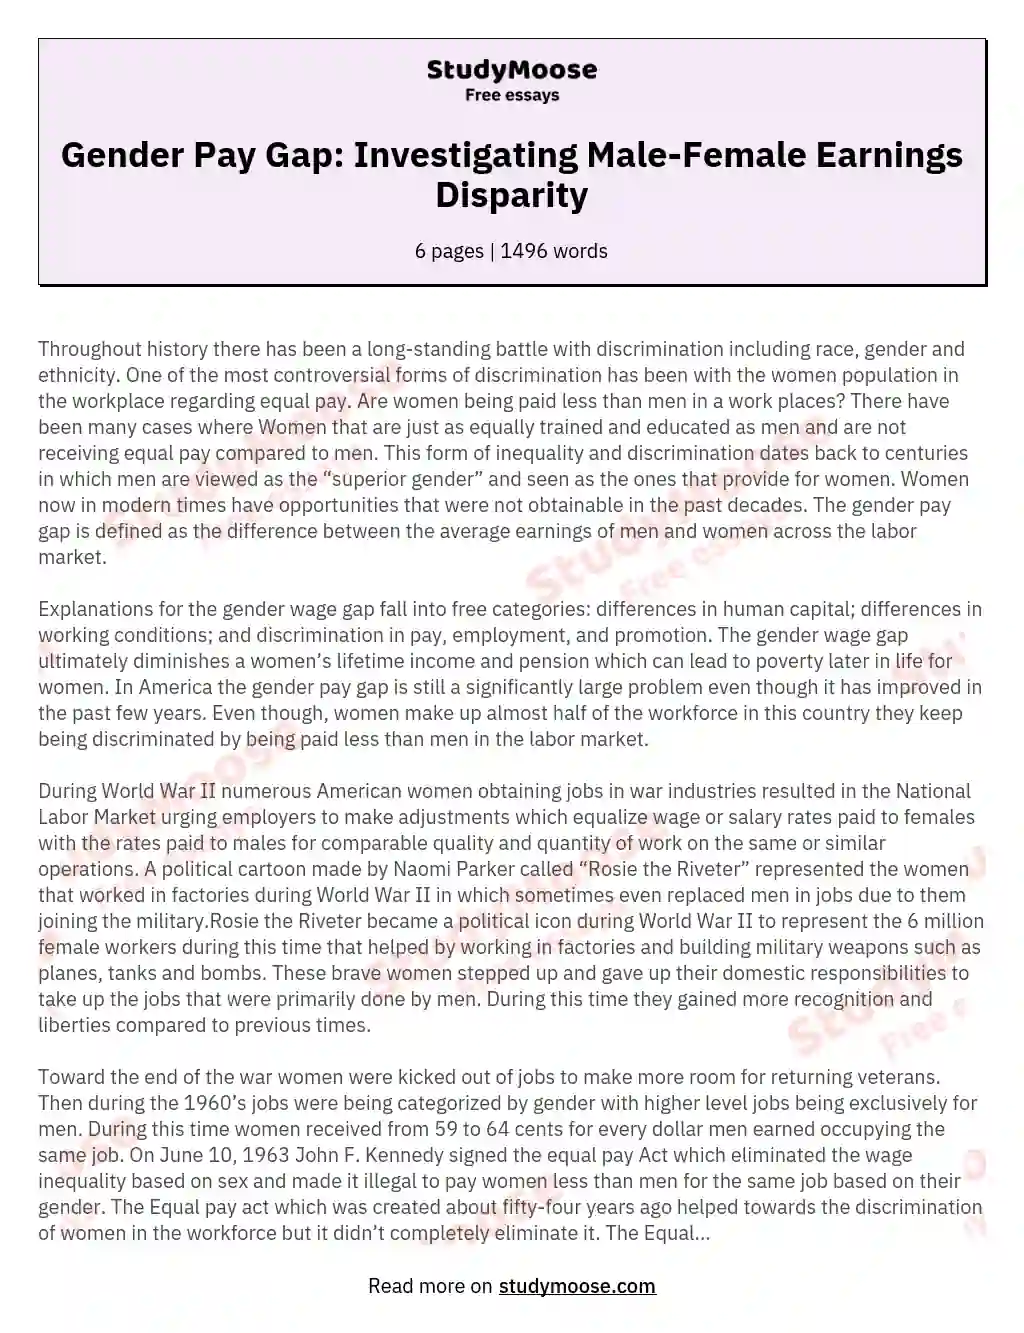 Gender Pay Gap: Investigating Male-Female Earnings Disparity essay